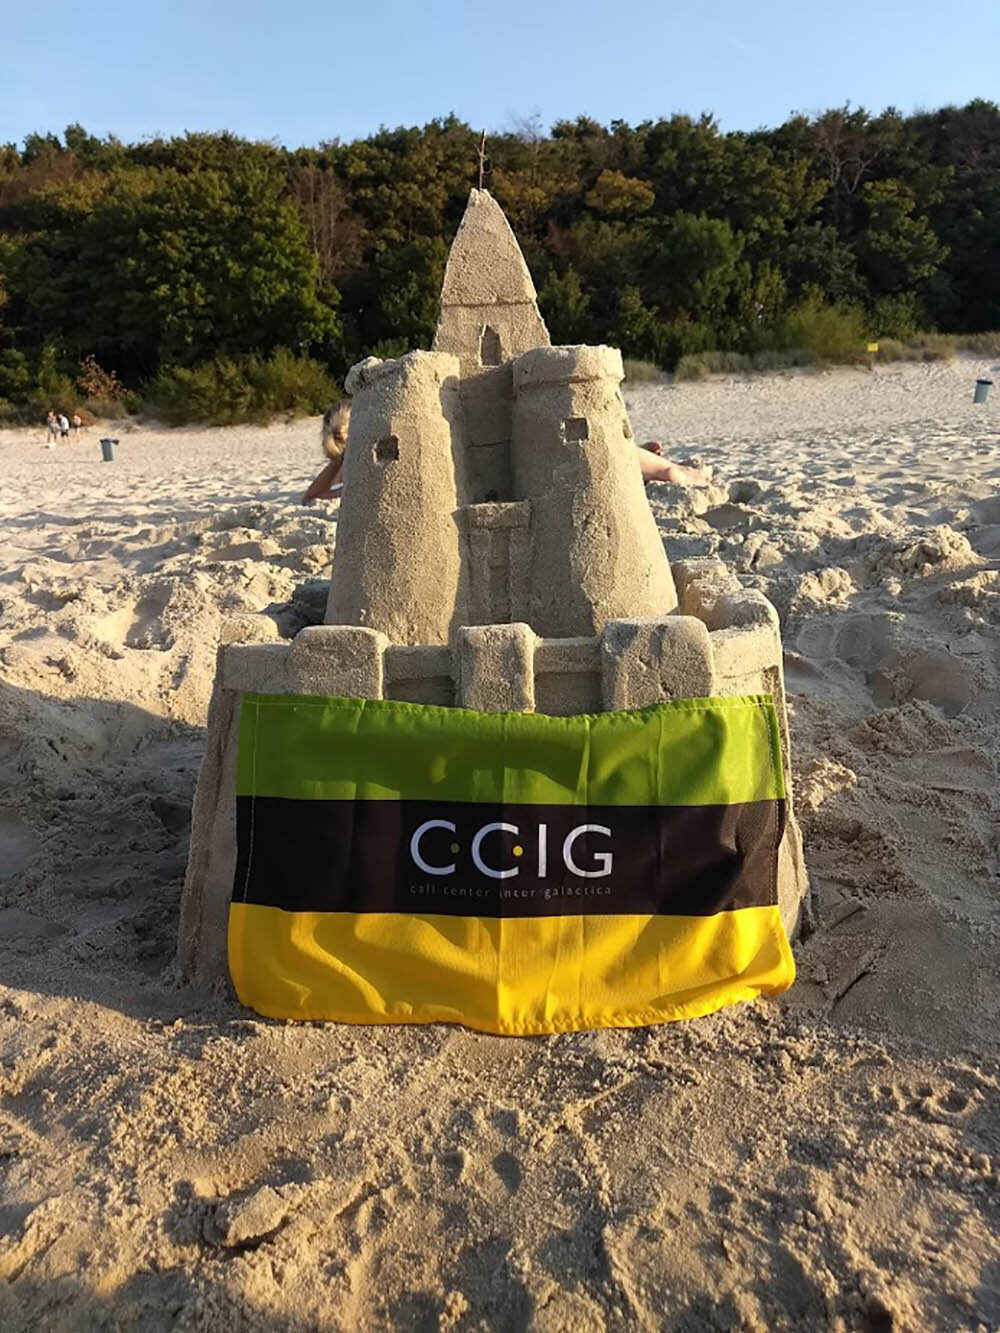 CCIG Akcja Flaga 2018 - zamek z piasku i flaga CCIG